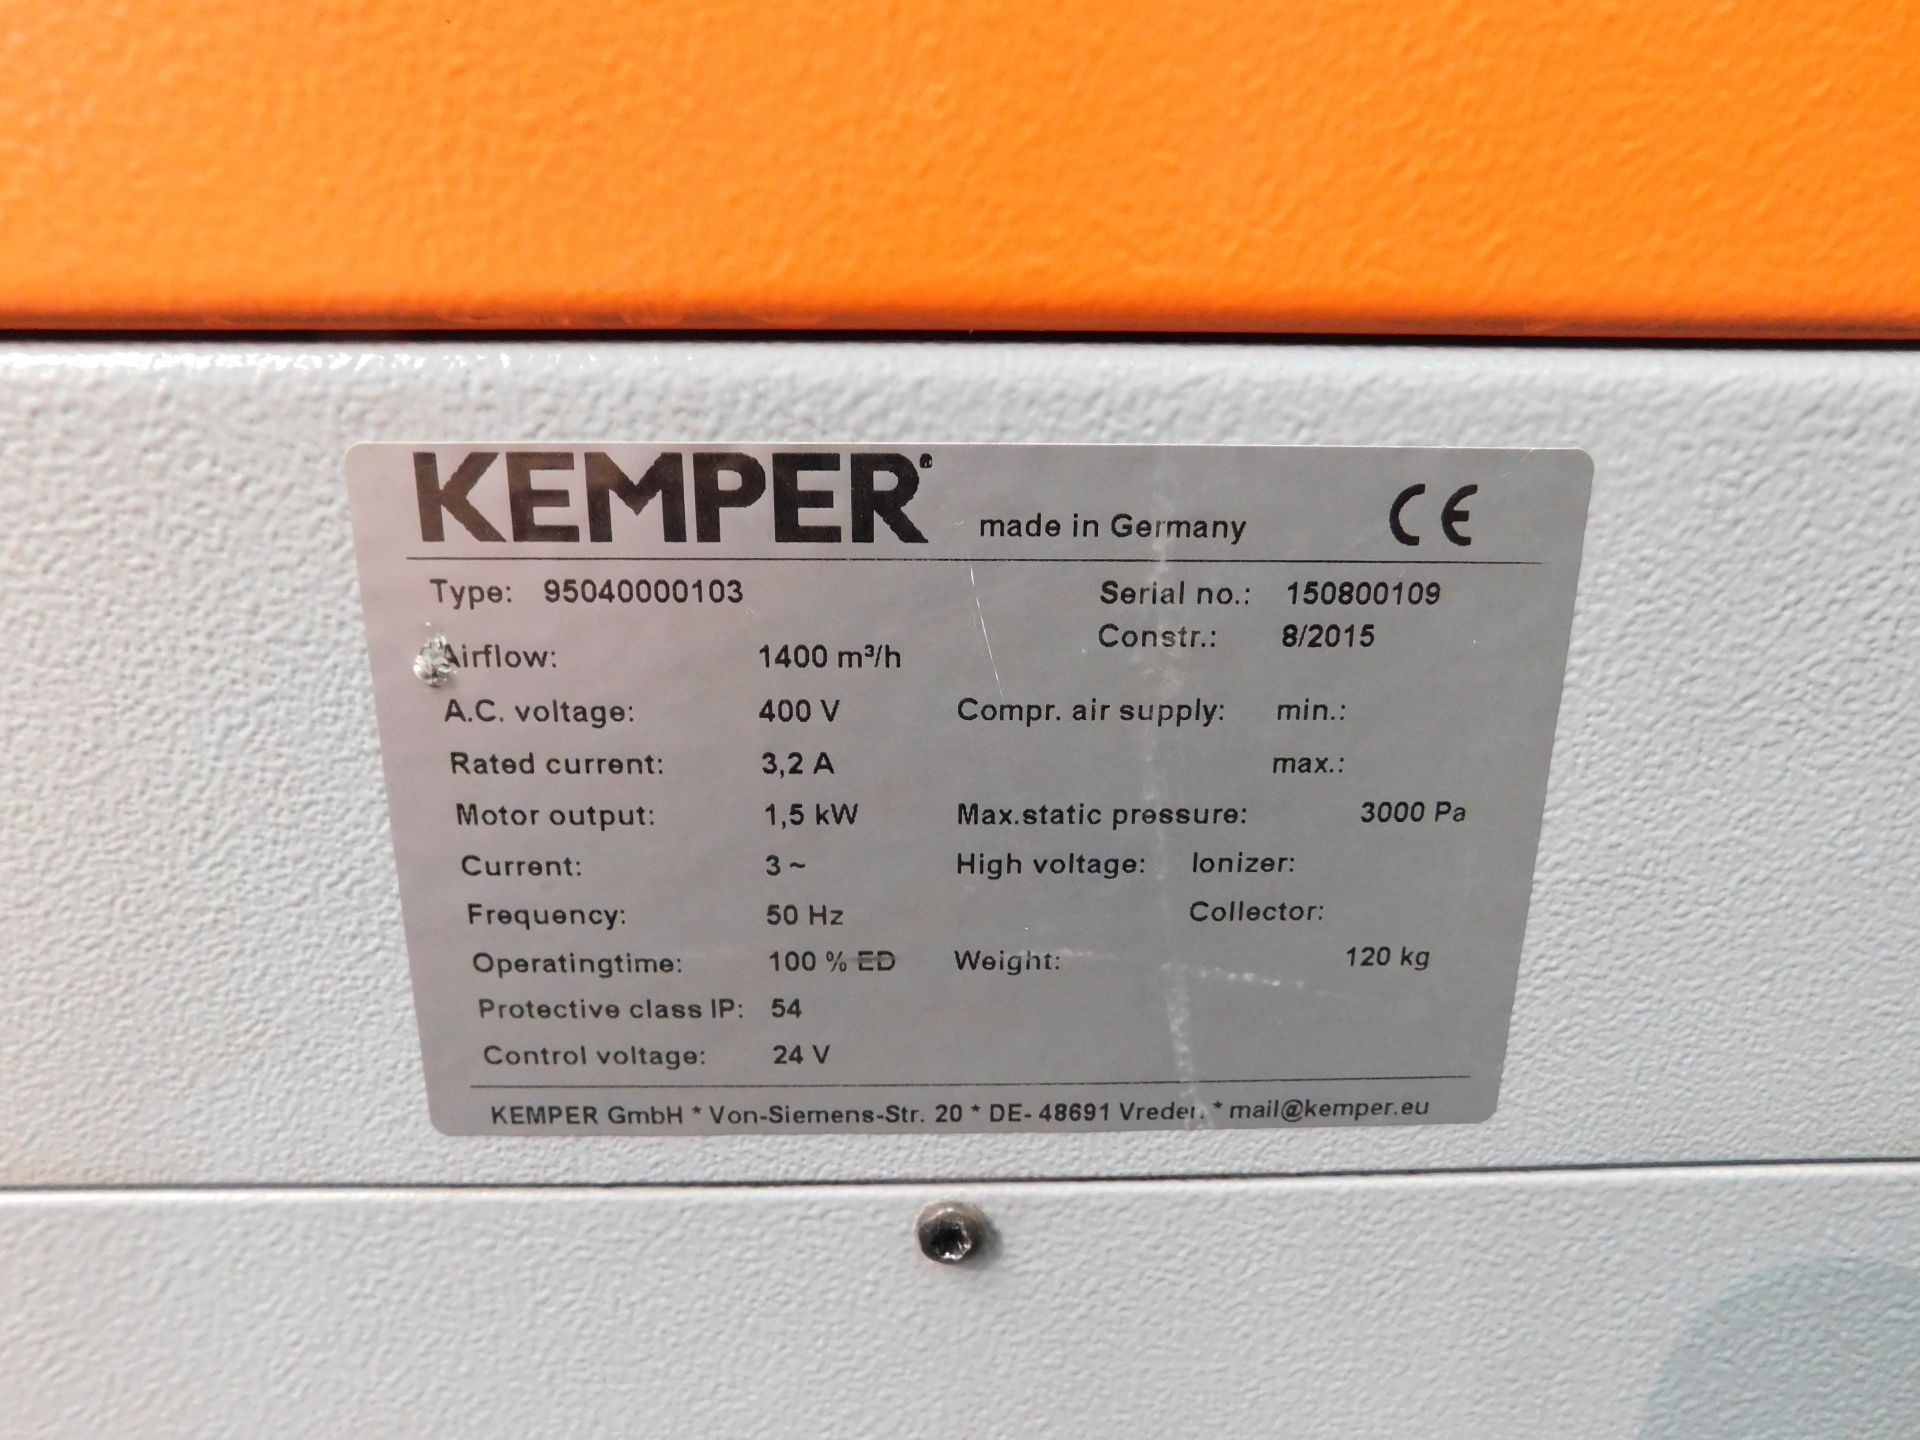 Kemper Welding Table & Filter Unit (2015), serial number 150800109 - Image 3 of 4